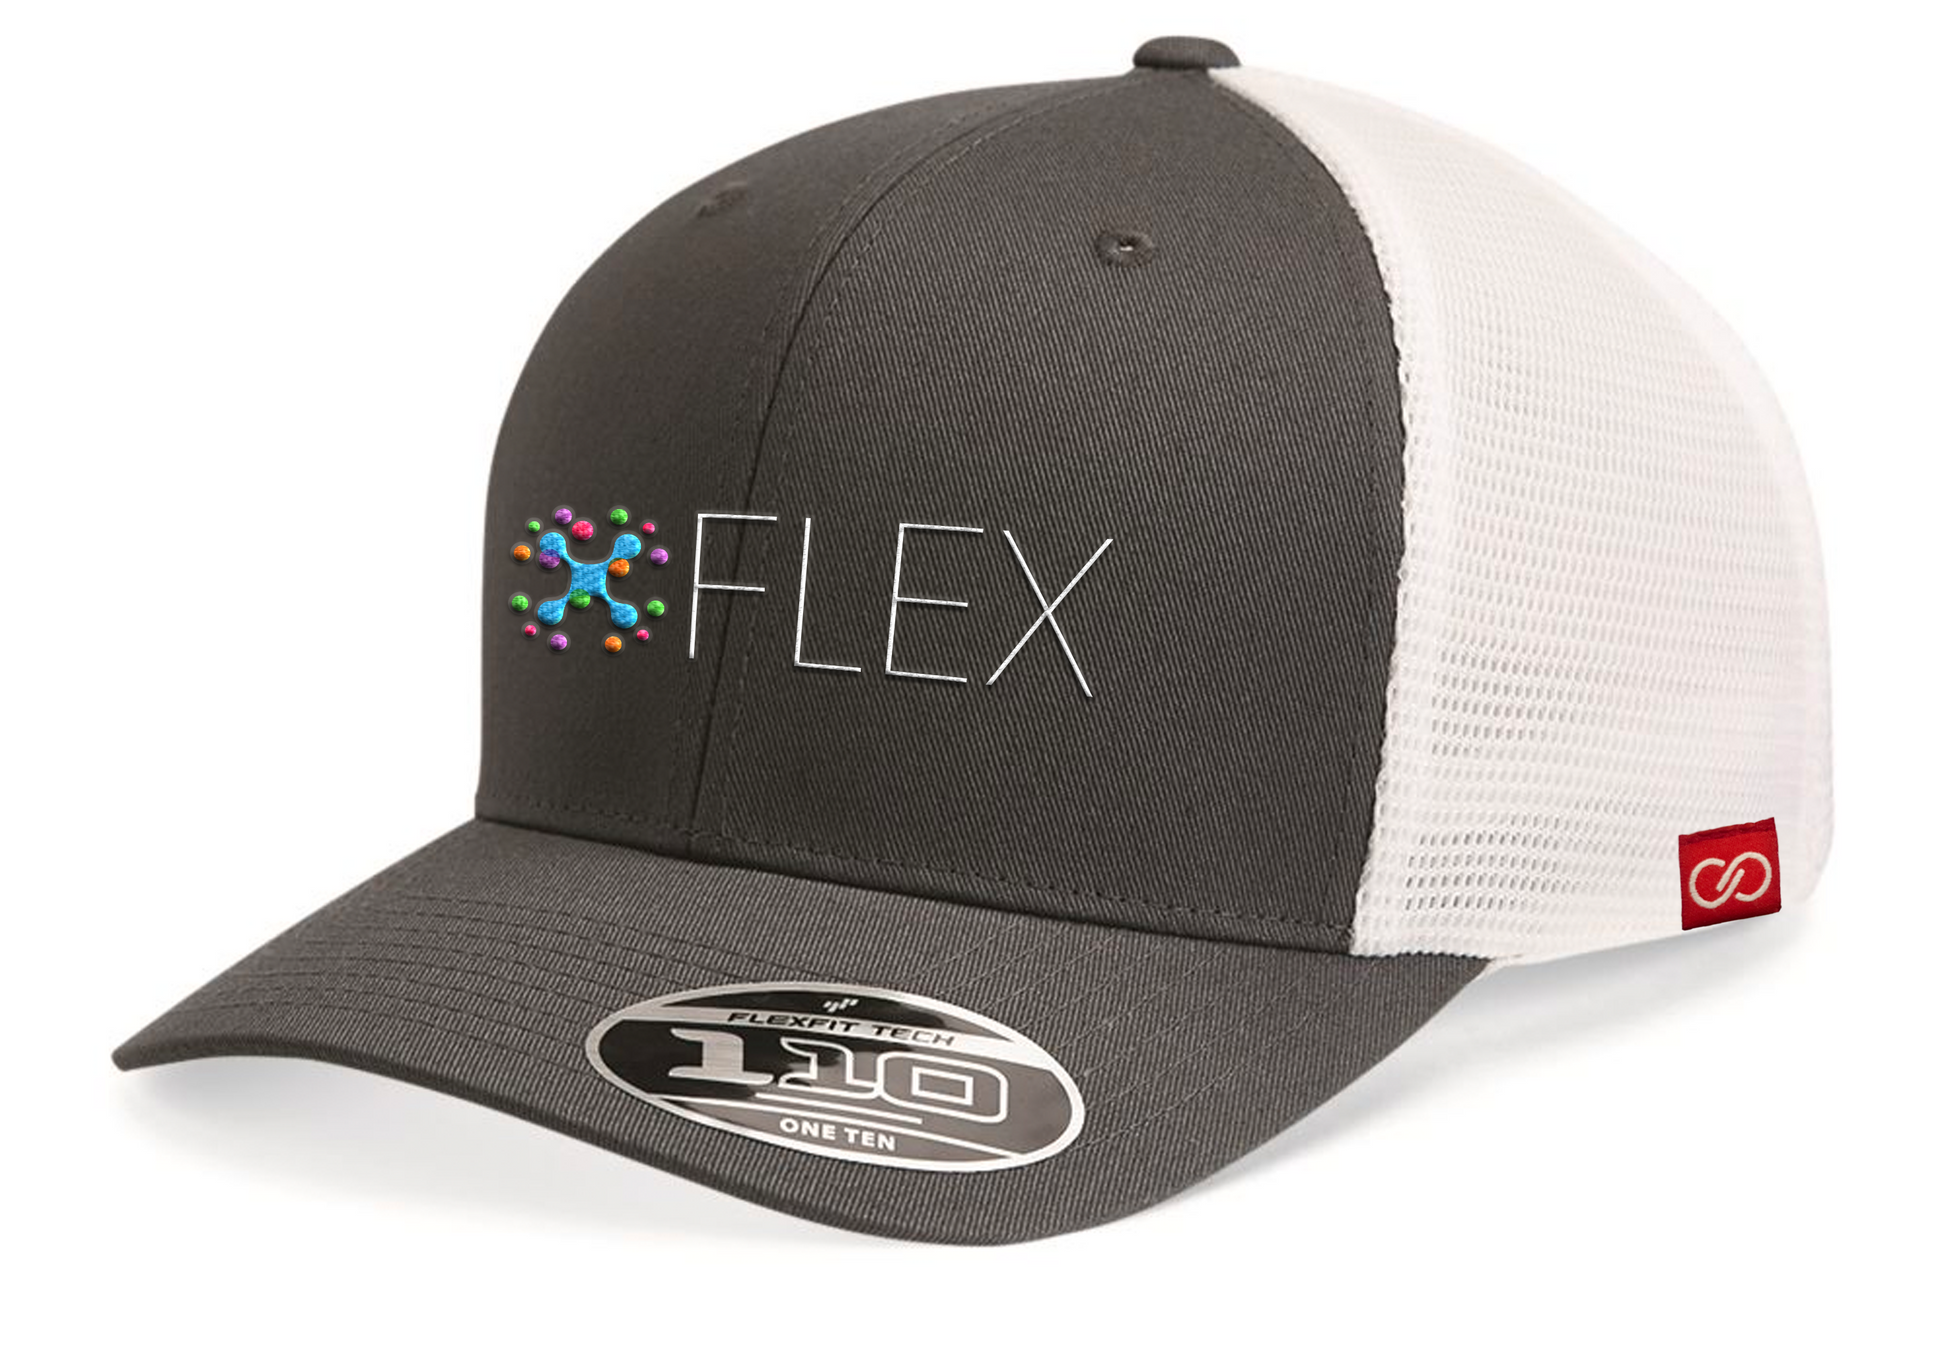 FLEX charcoal gray / white snapback hat – FLEX Gear